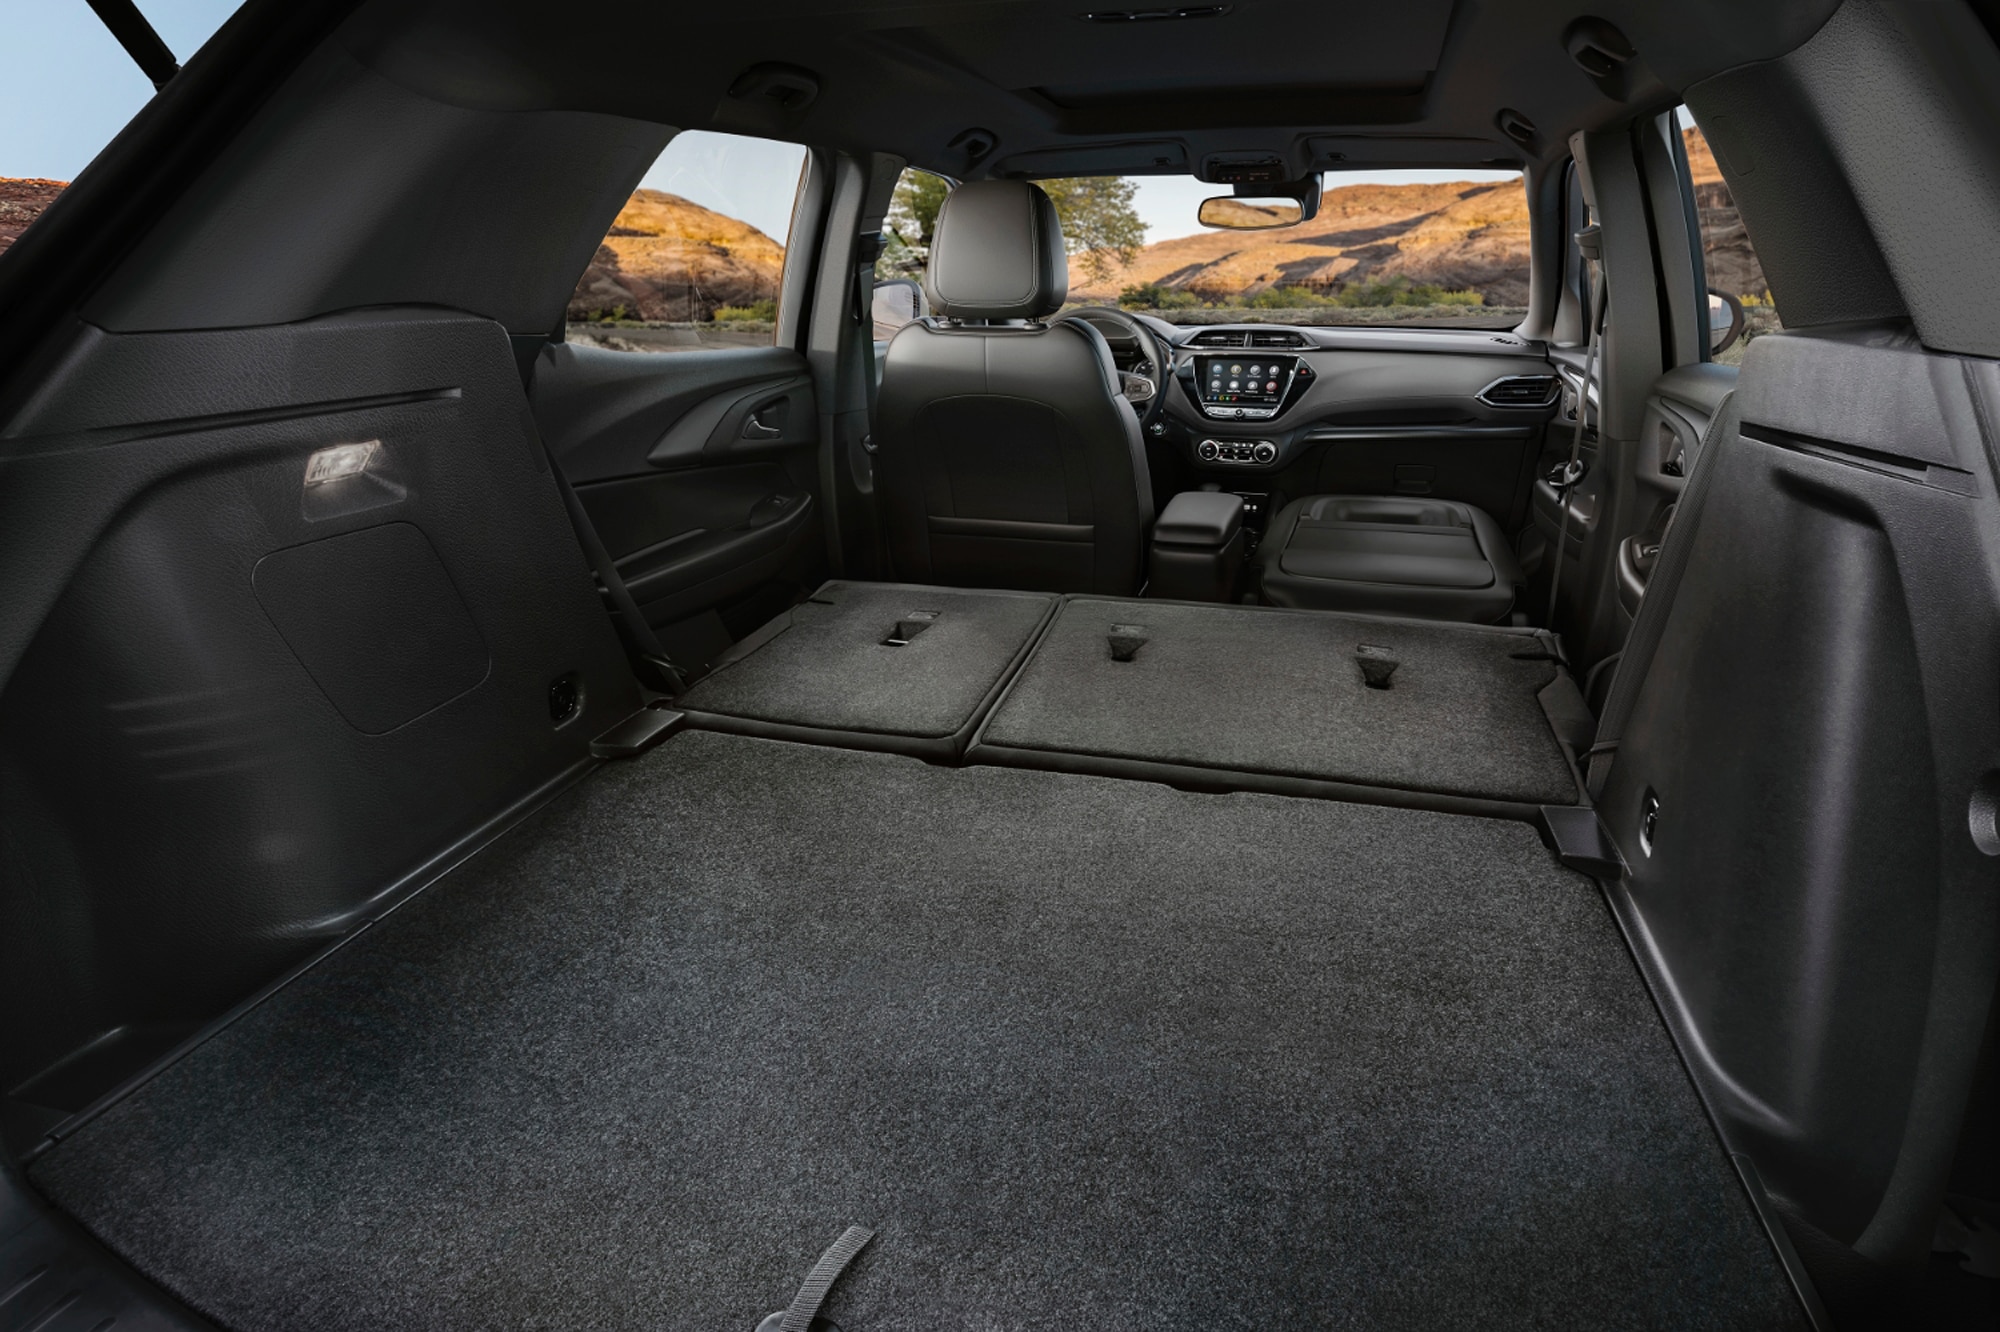 2023 Chevrolet Trailblazer cargo space with passenger seats down